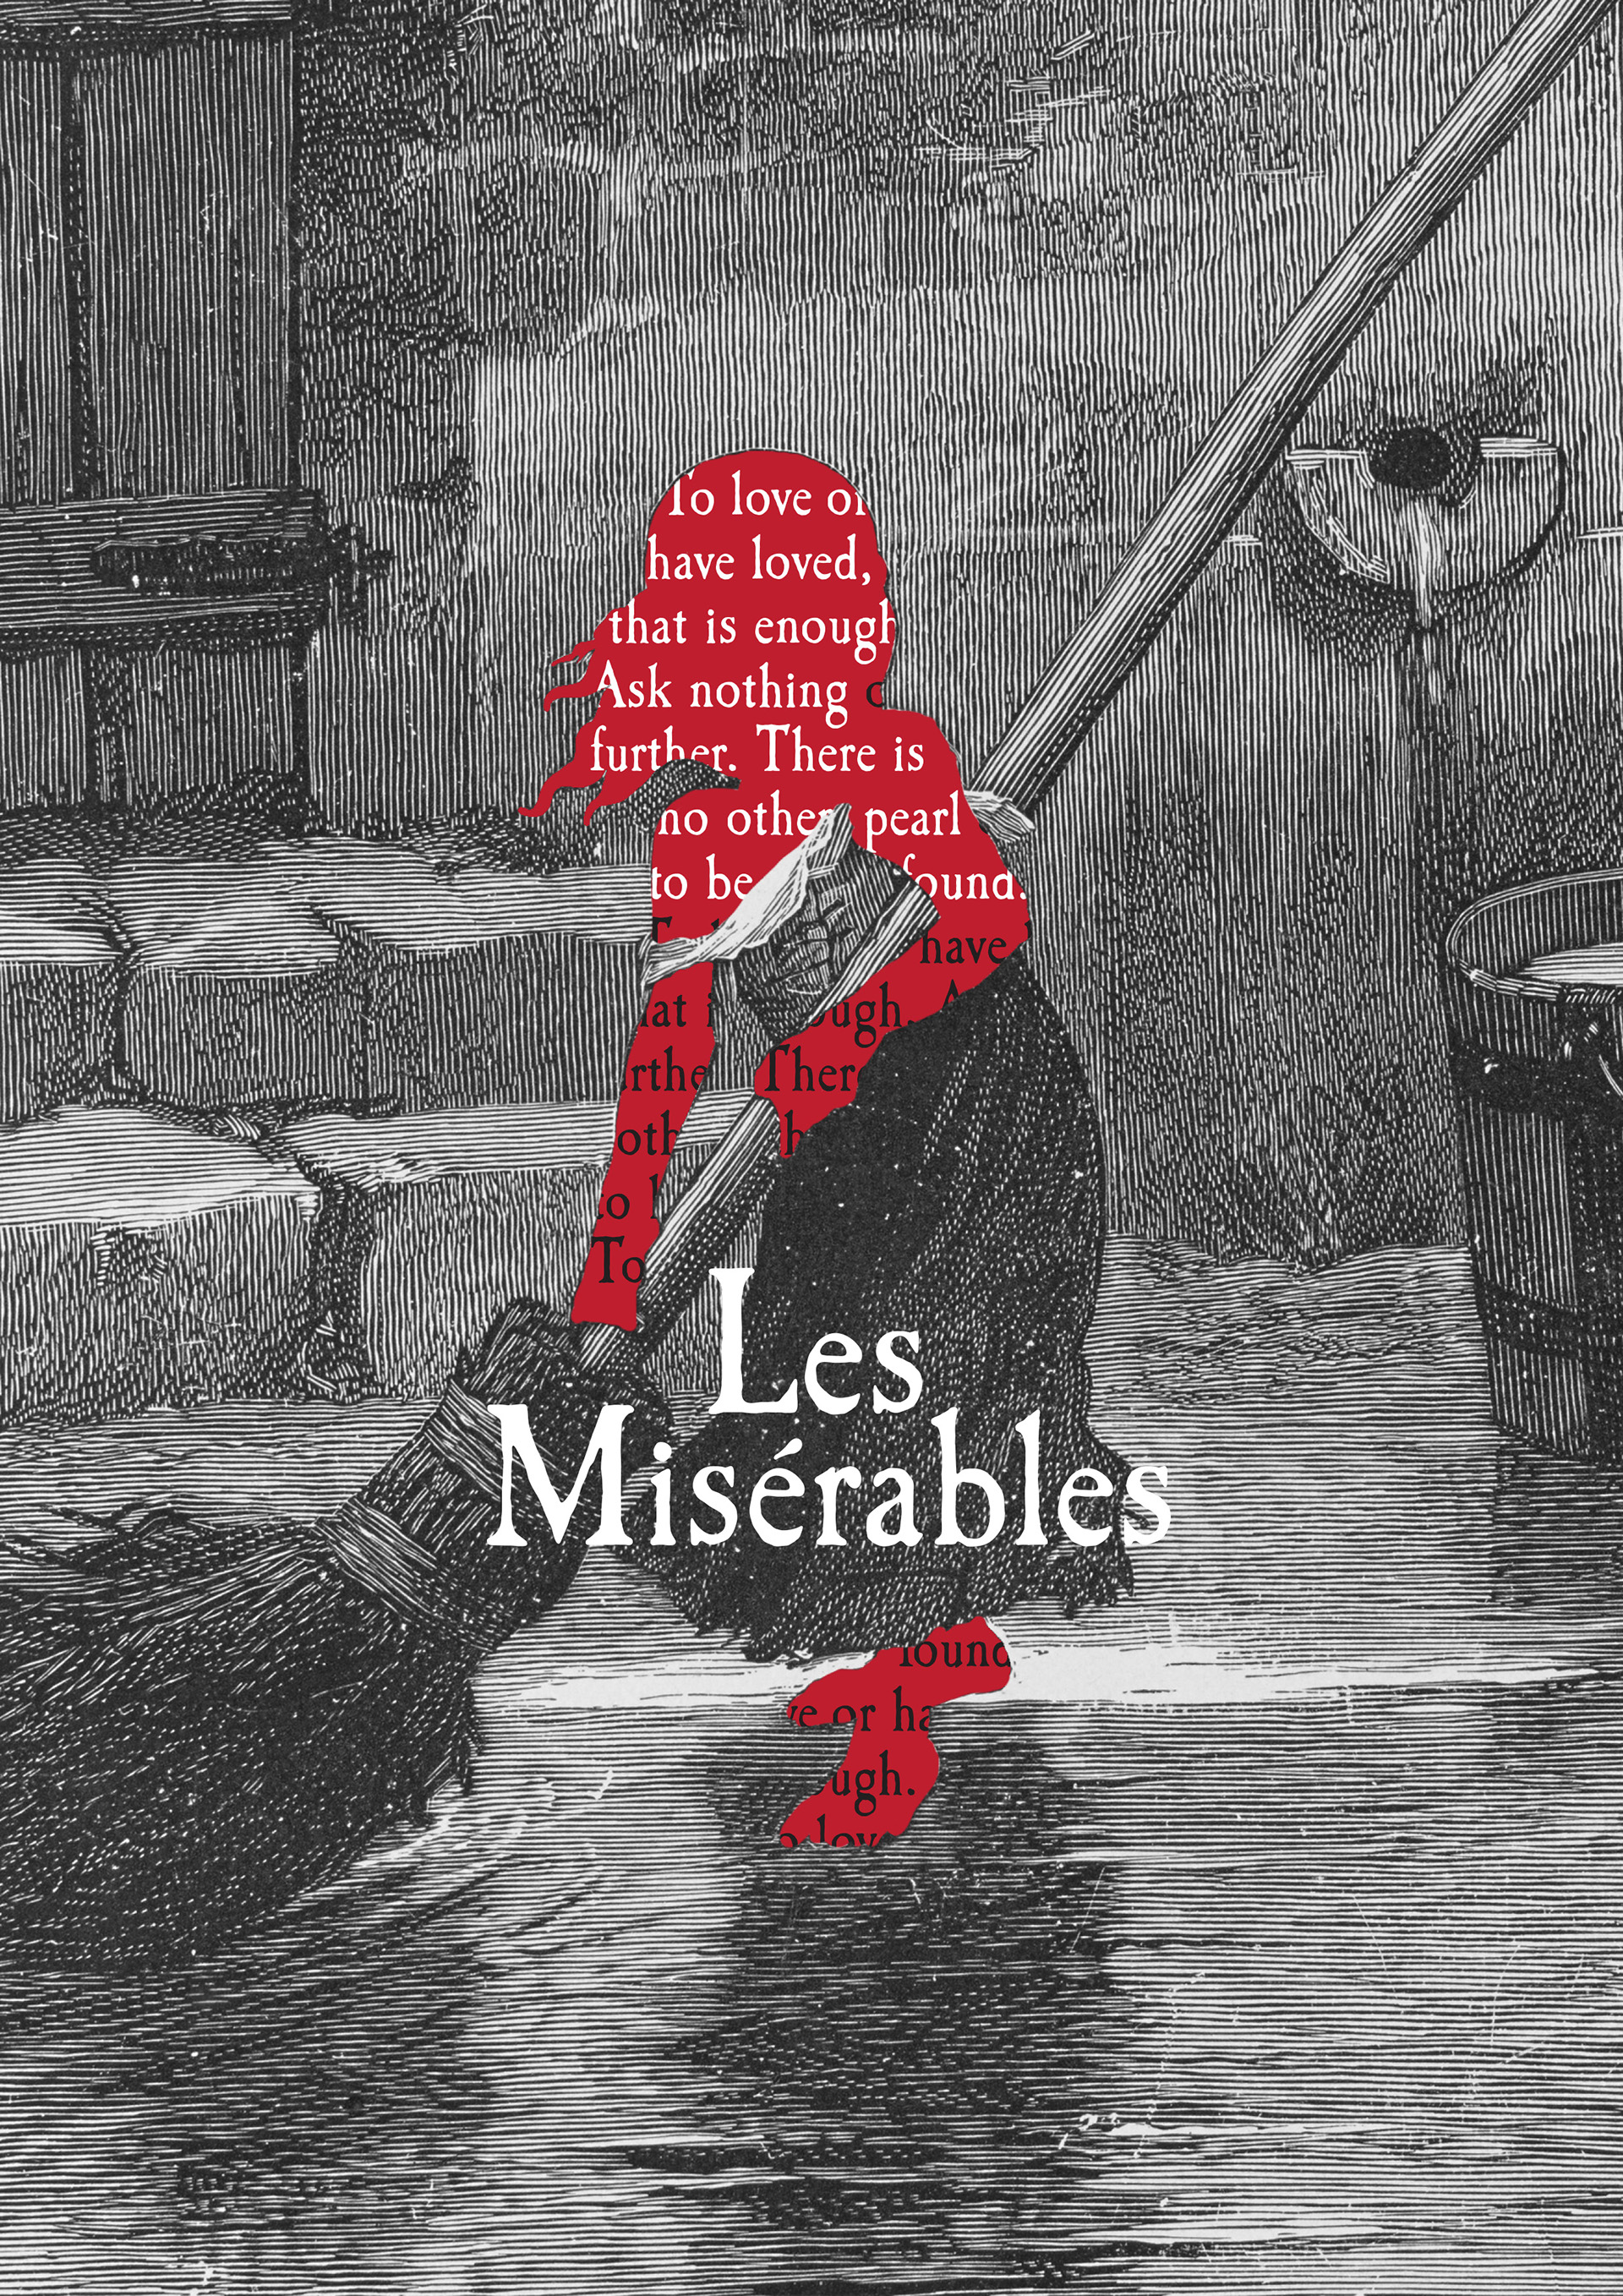 Defining Les Misérables in the 21st Century